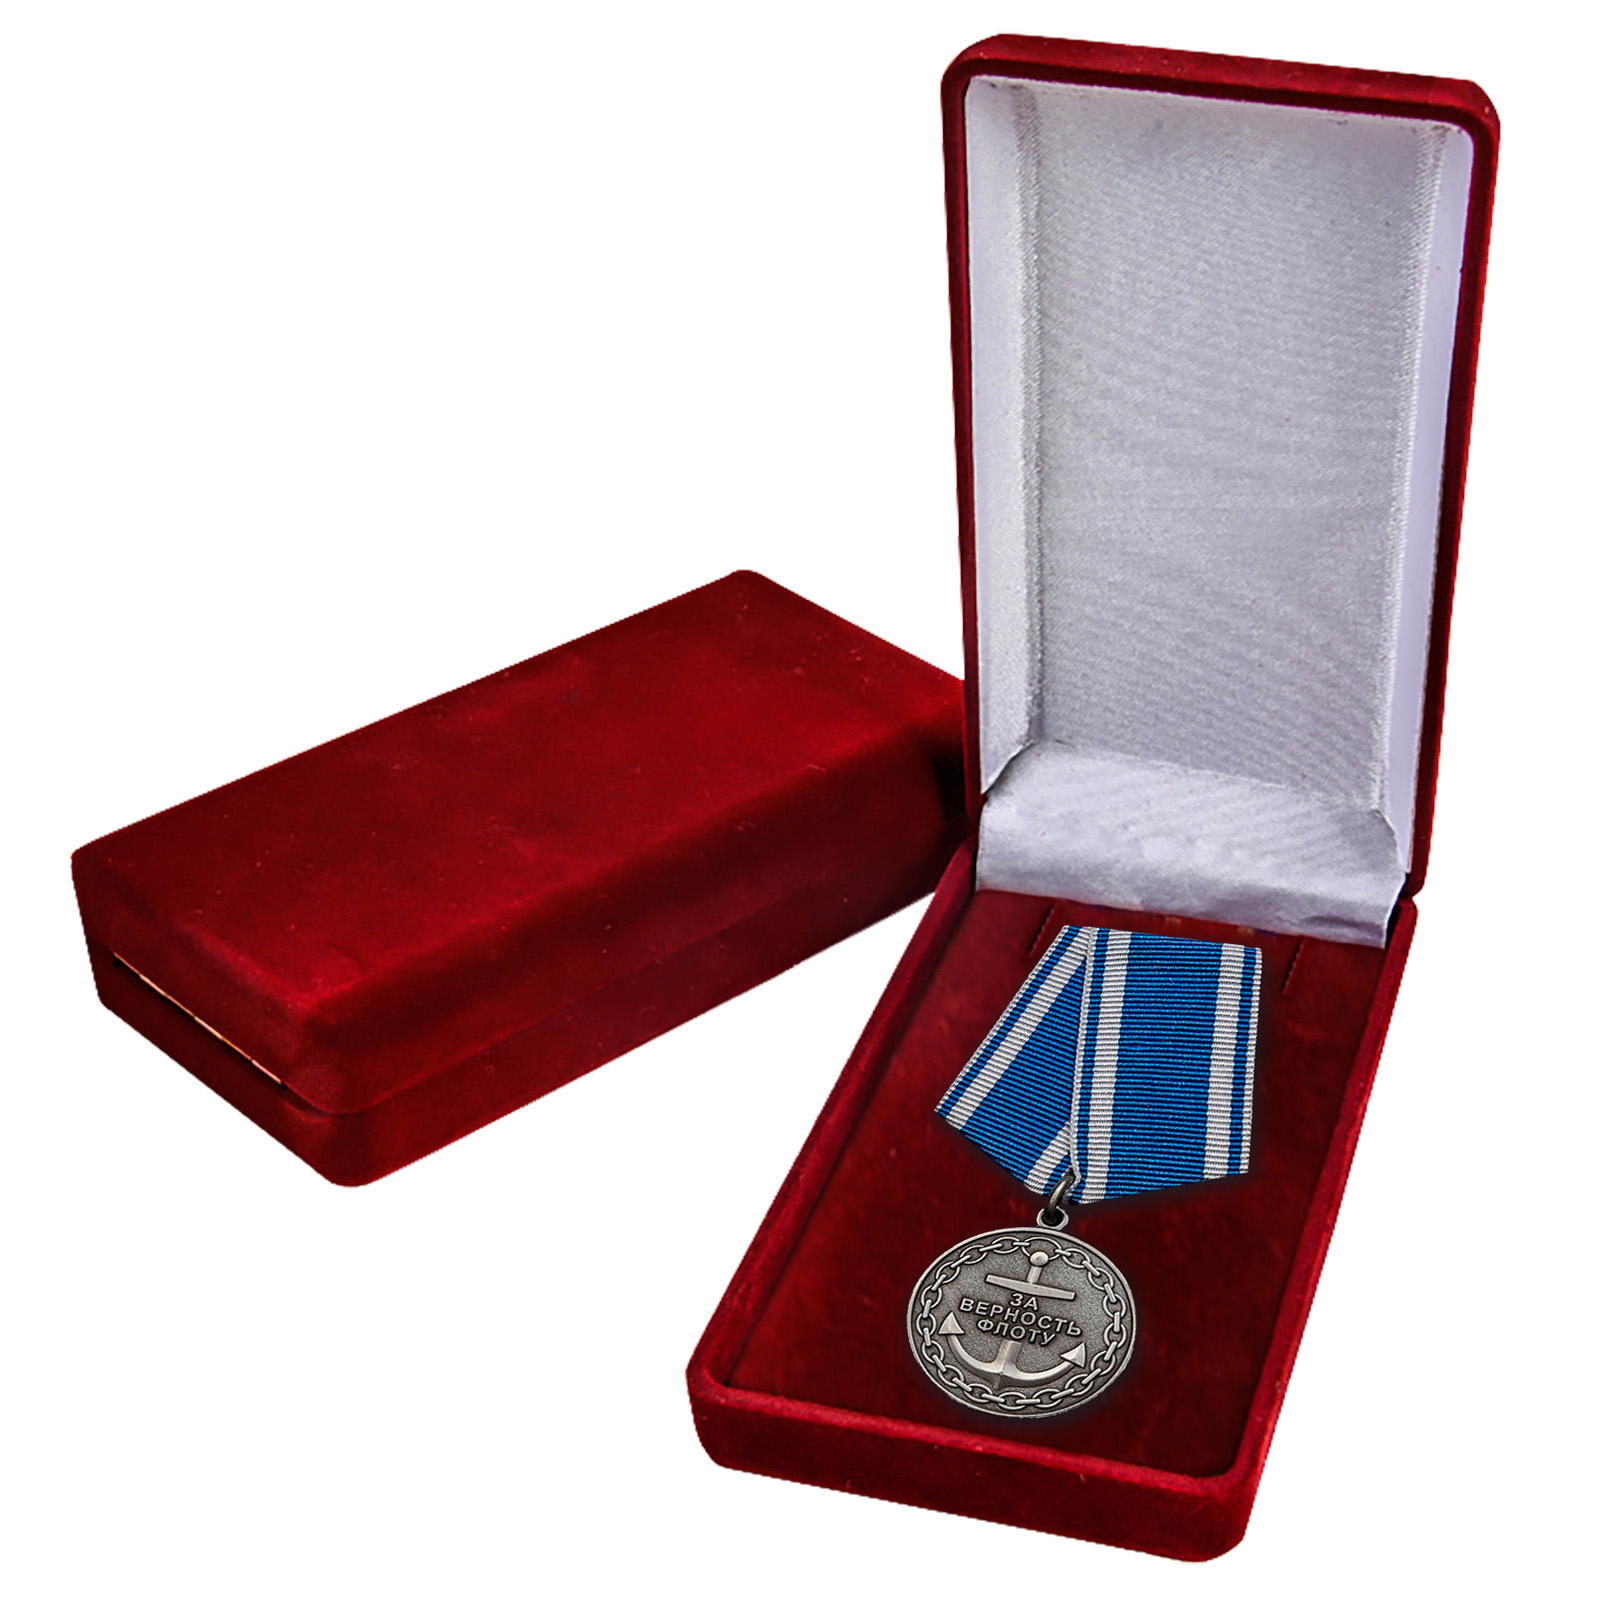 Медаль Военно-Морского флота 